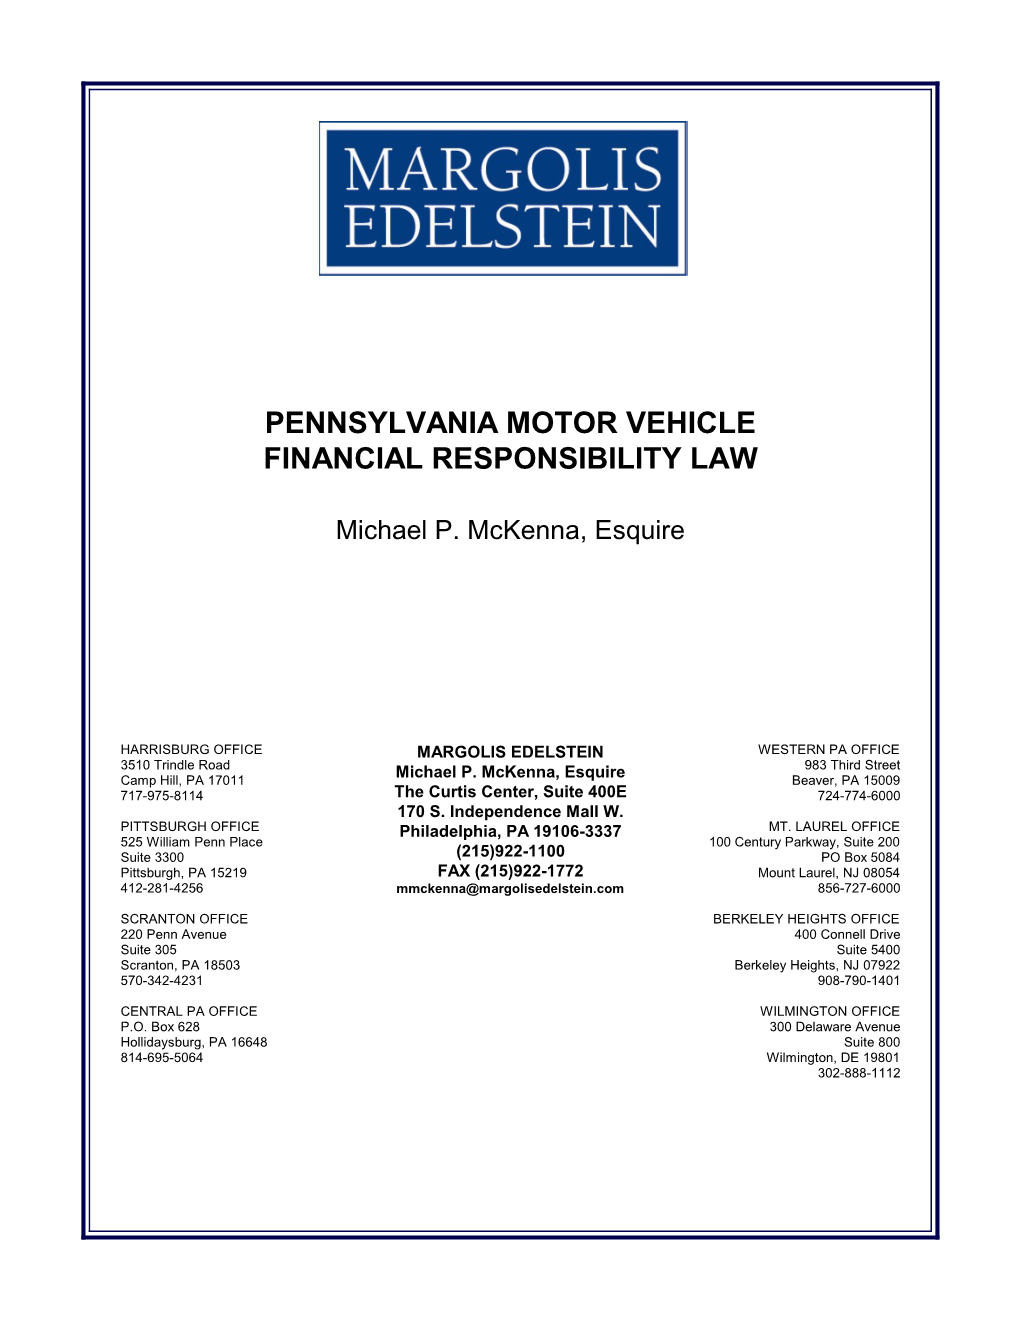 Pennsylvania Motor Vehicle Financial Responsibility Law